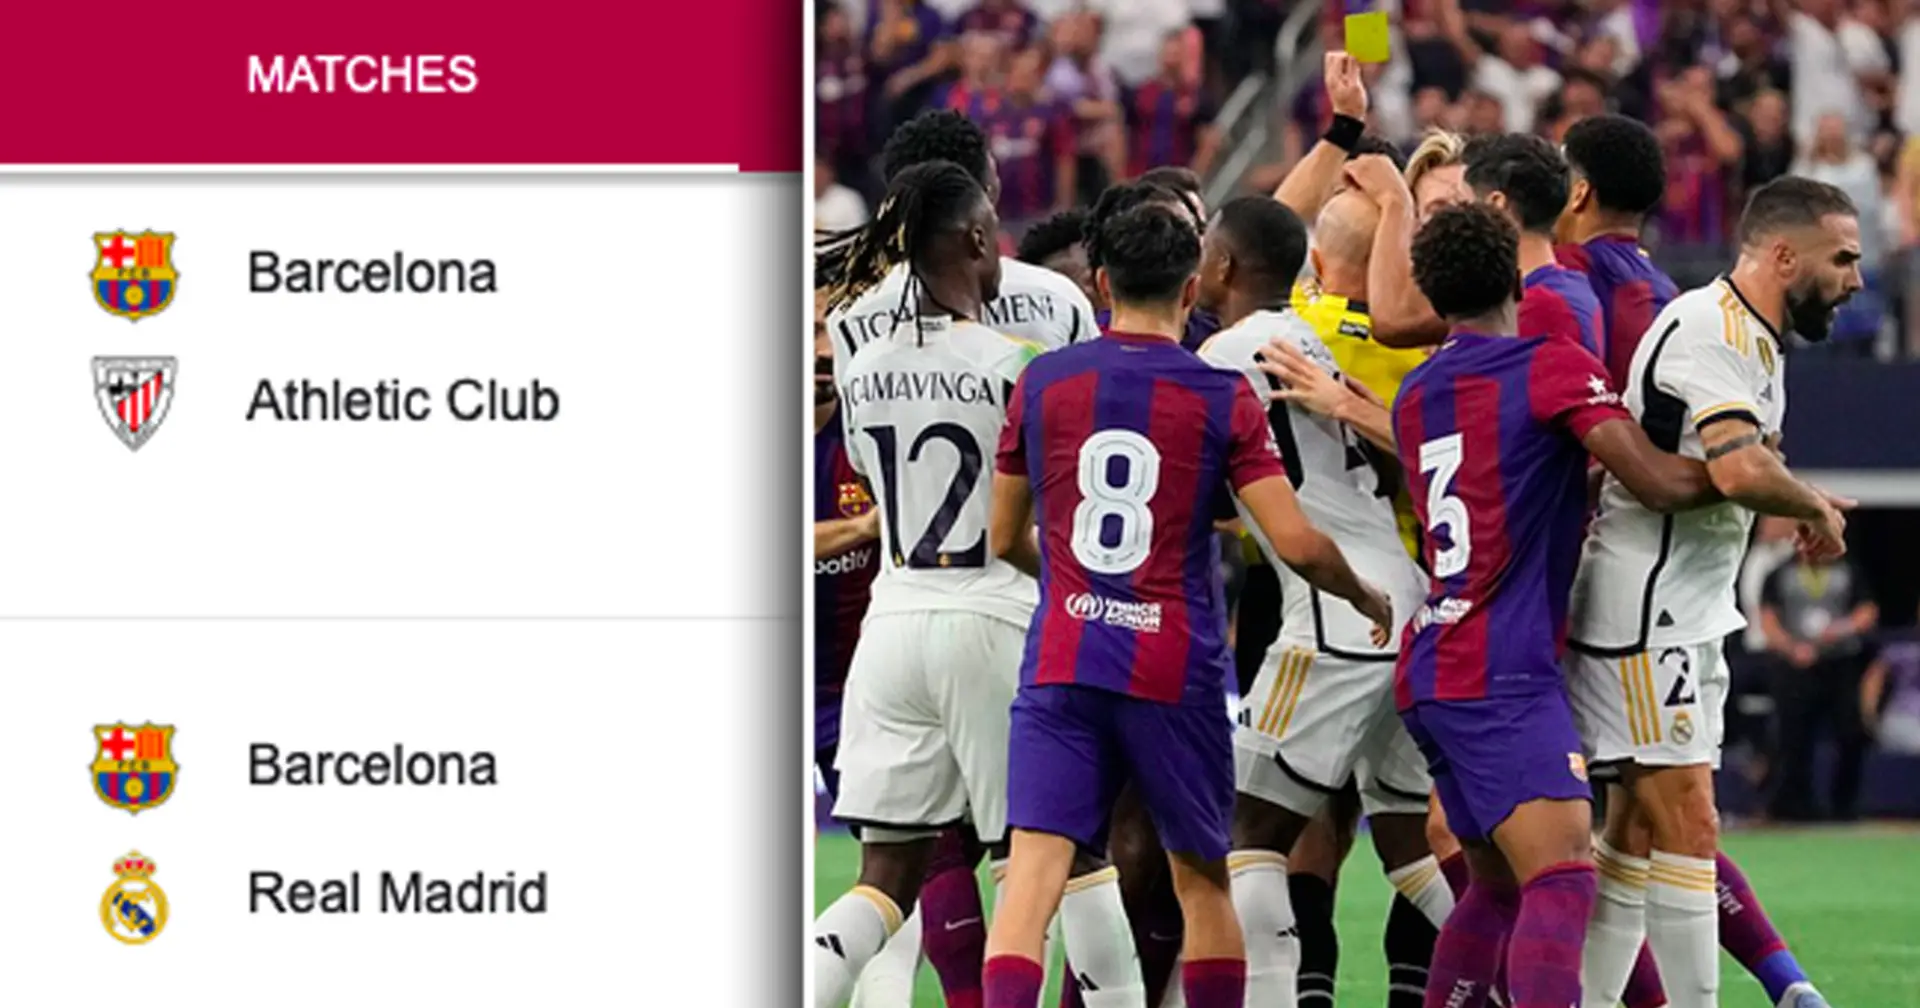 El Clasico, 2 Champions League clashes: Barca's 5 fixtures in October